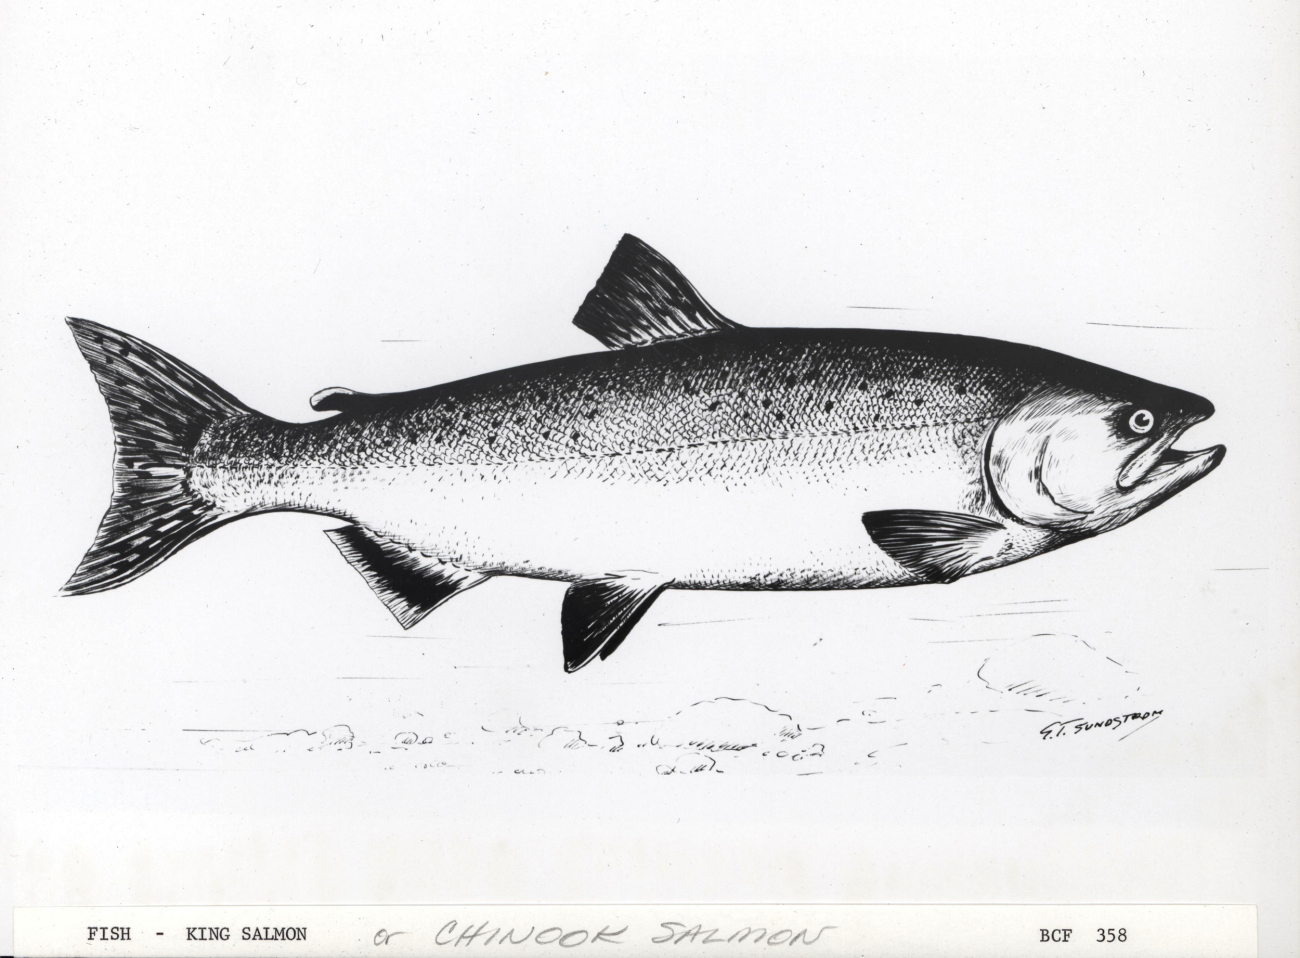 King salmon or chinook salmon drawn by G